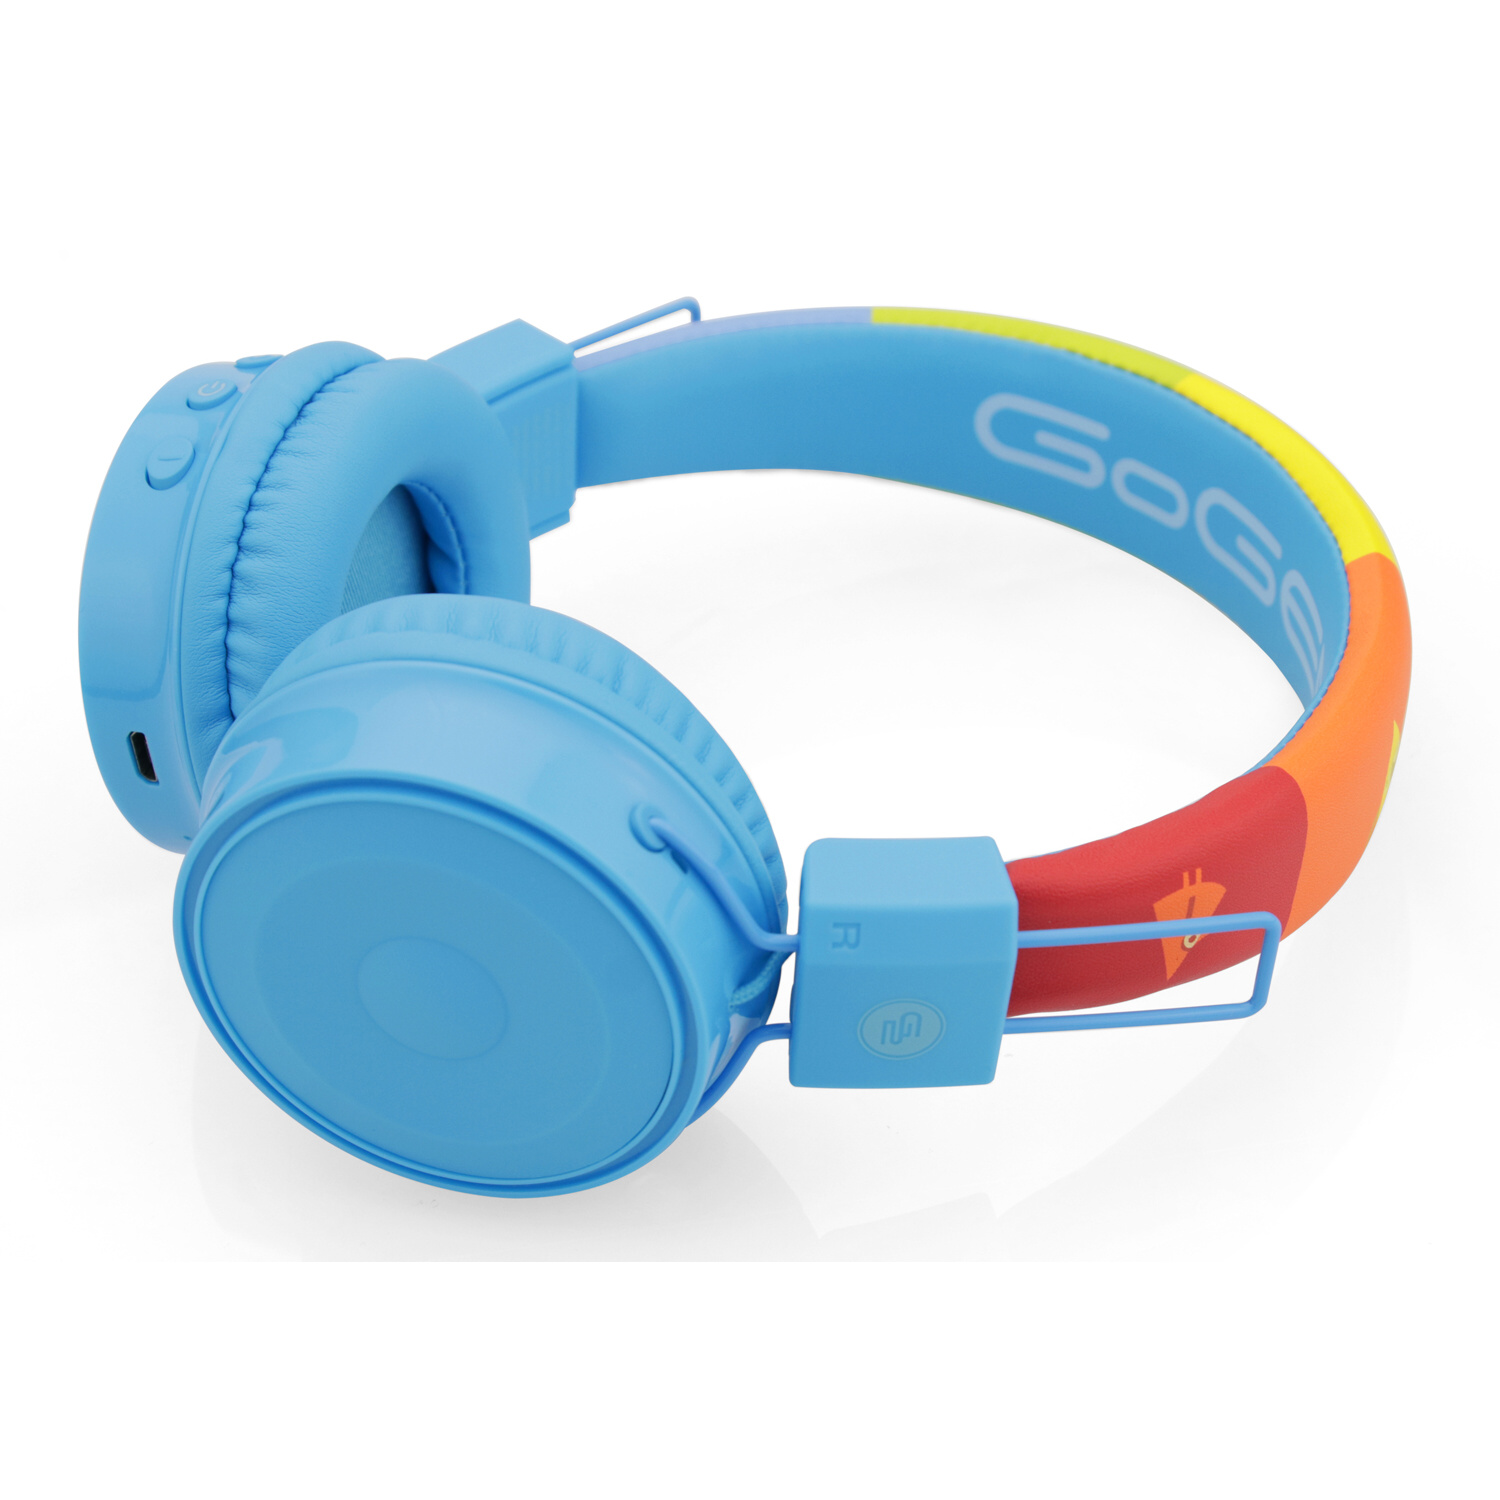 GOGEN DECKO SLECHY Bluetooth Over-ear Blau B, Kopfhörer